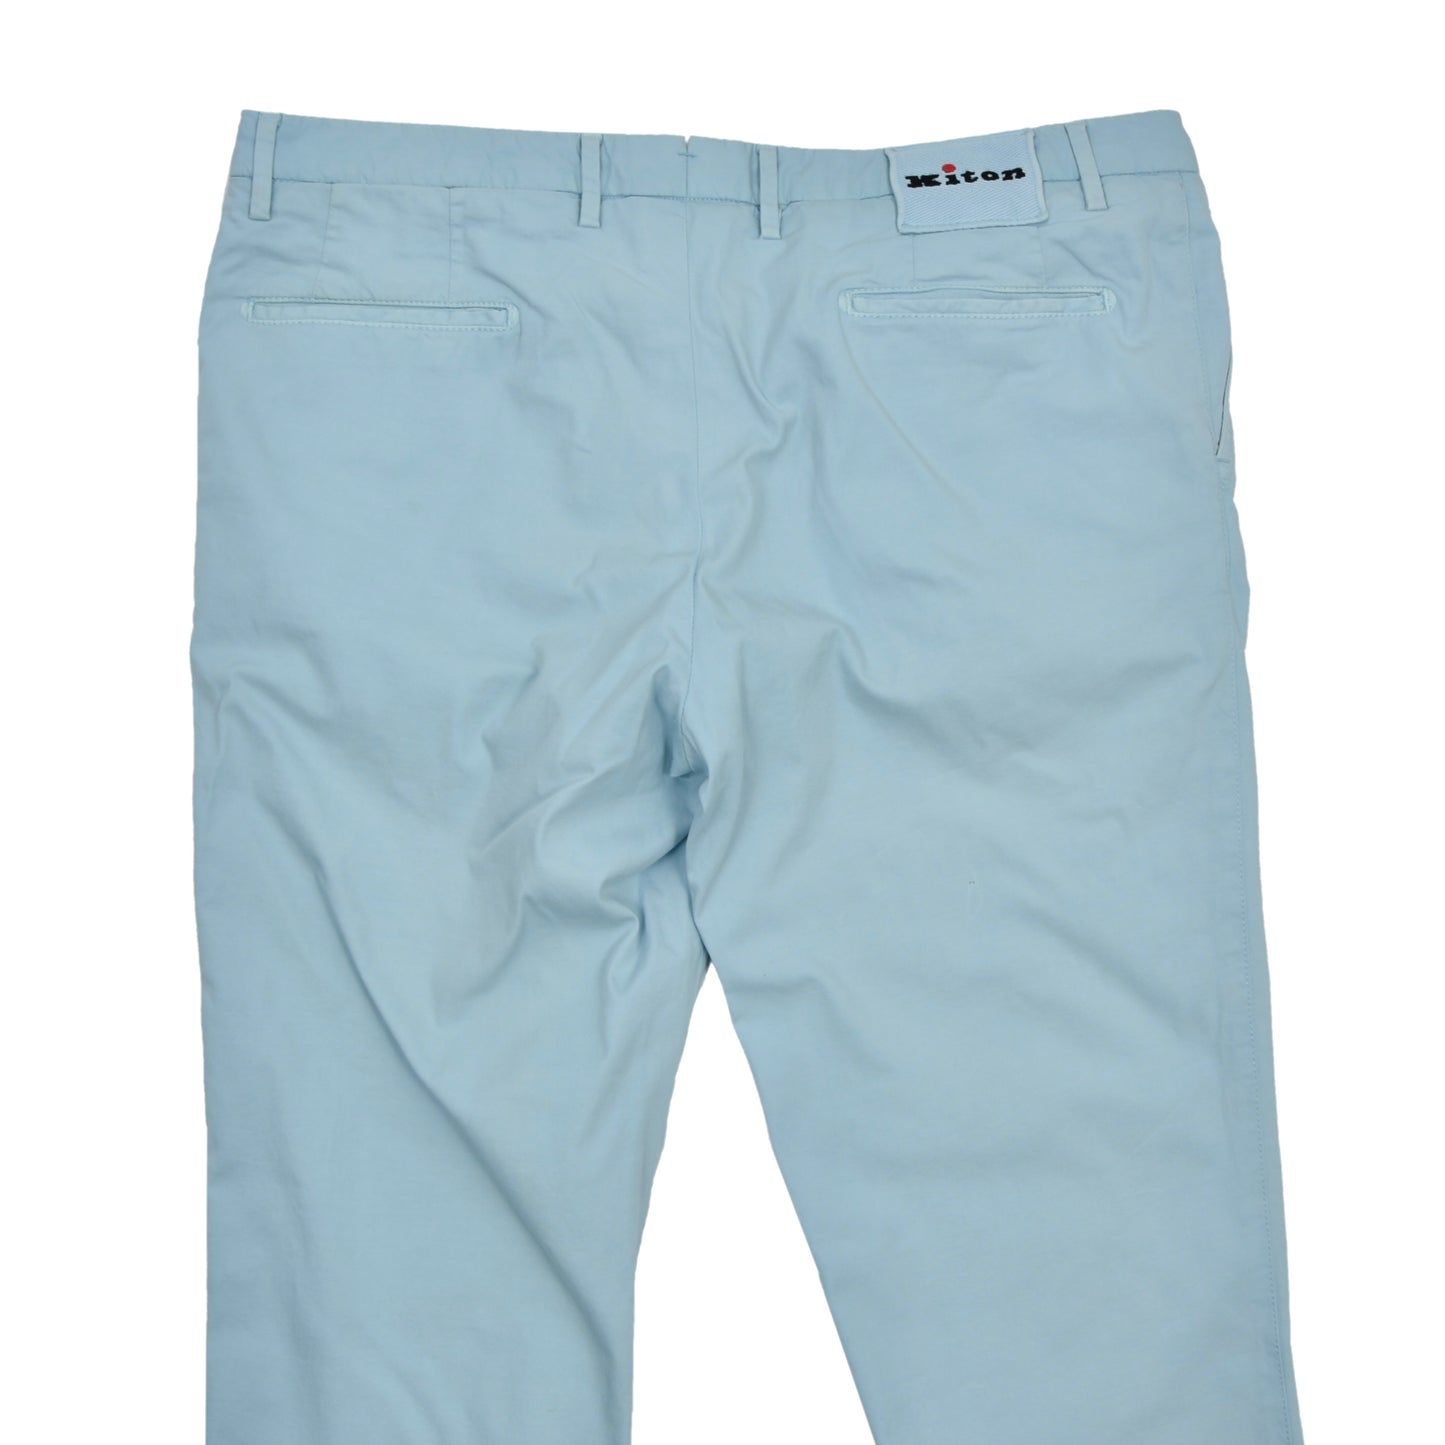 PT05 Waikiki Shorts Größe 33 - Blau/Blaugrün